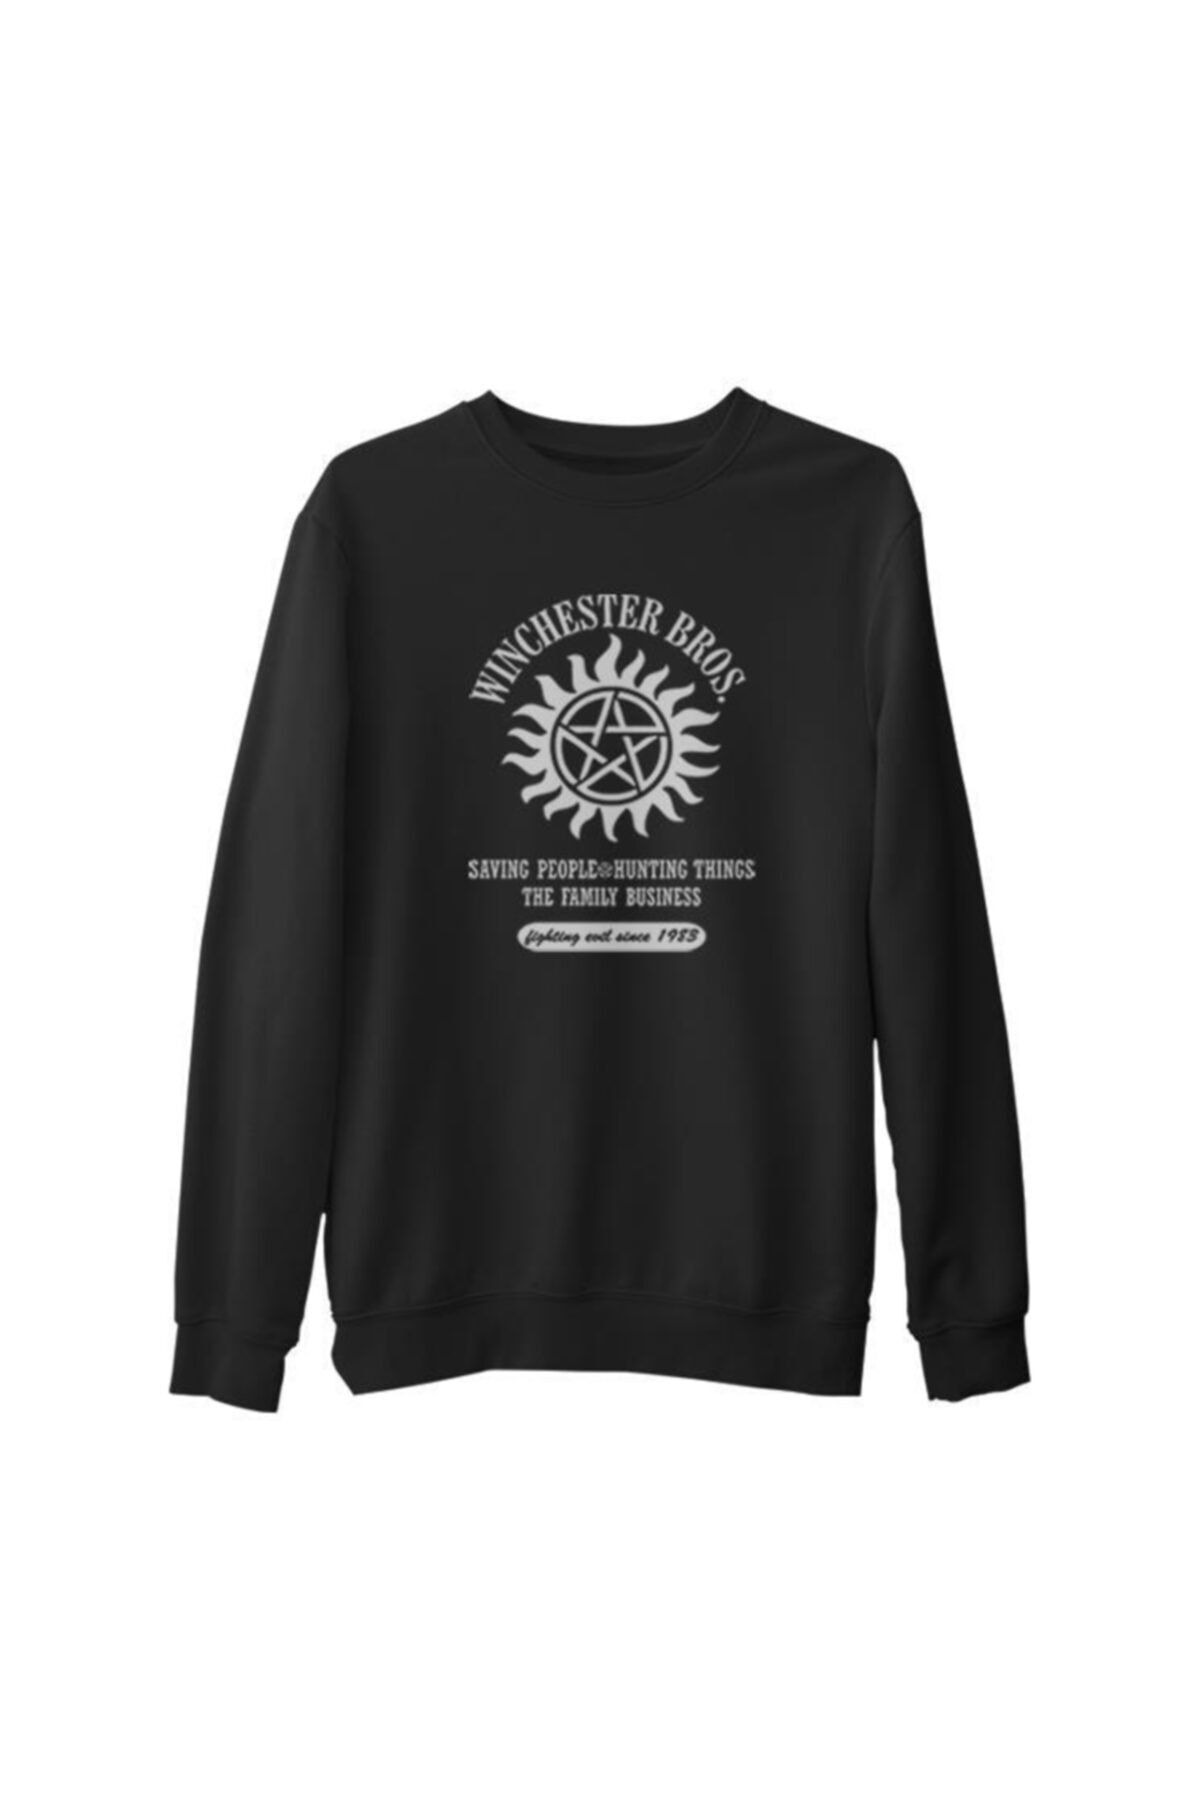 Lord T-Shirt Supernatural - Winchester Bros. Siyah Erkek Kalın Sweatshirt